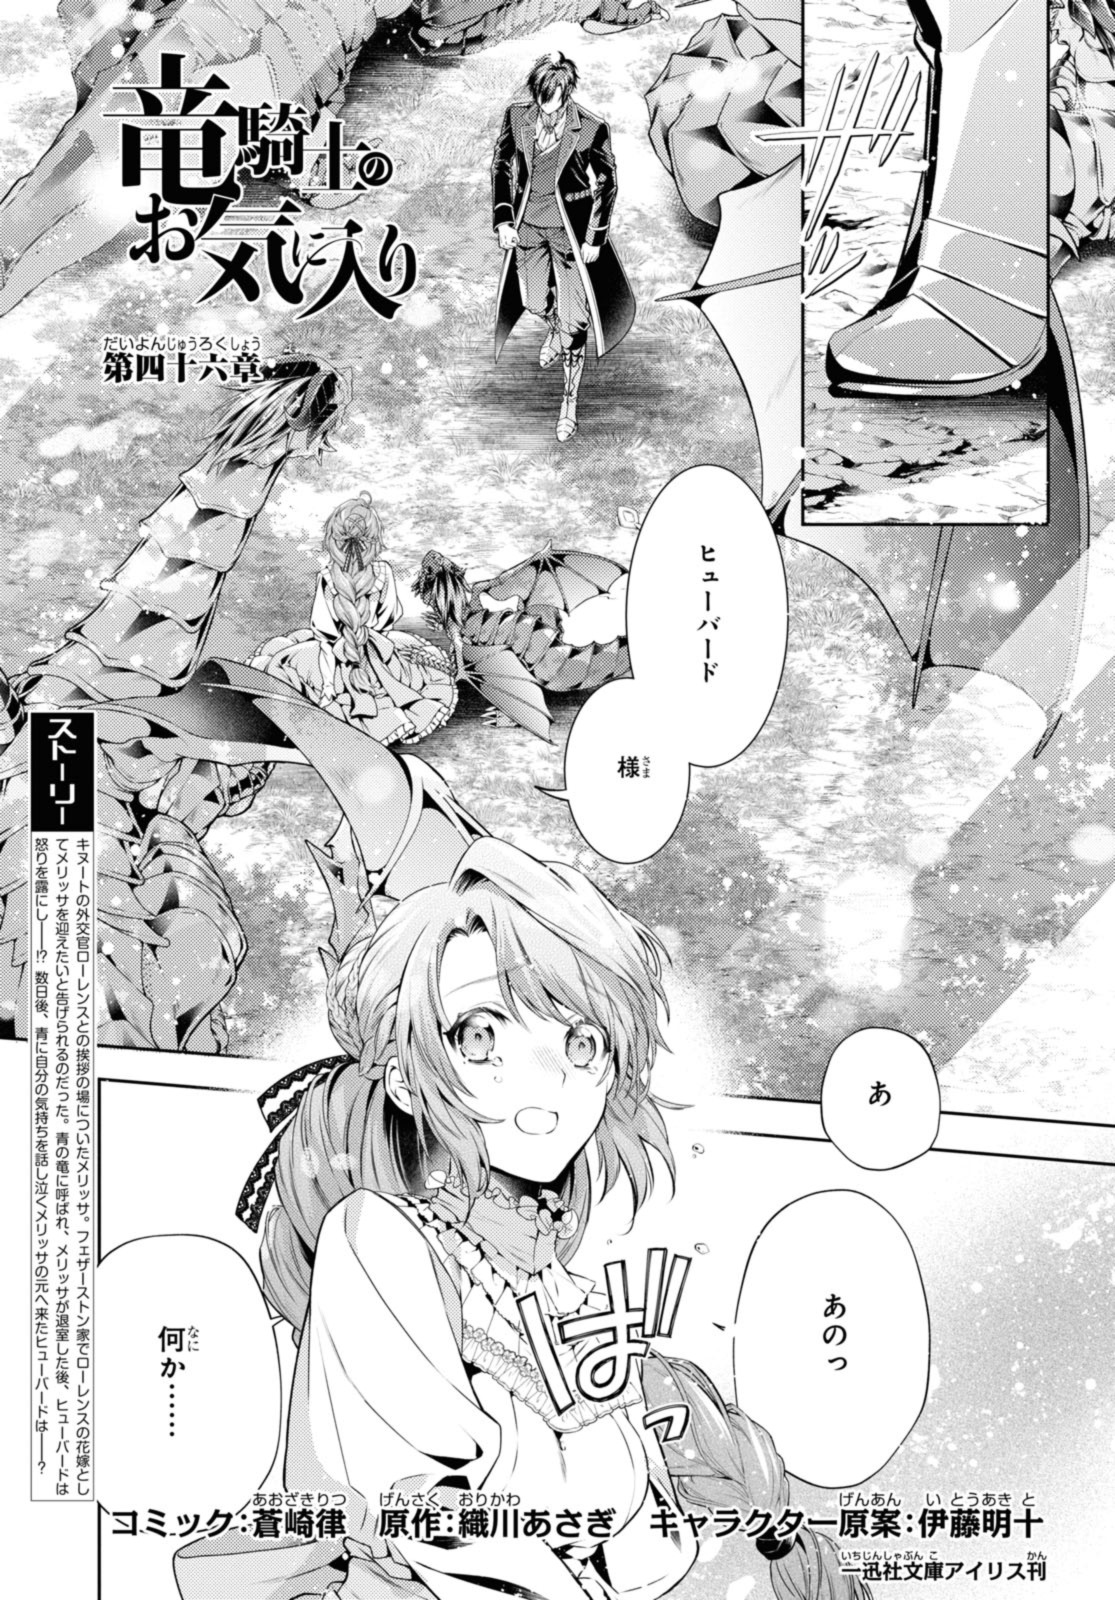 Ryukishi no Okiniiri - Chapter 46.1 - Page 1